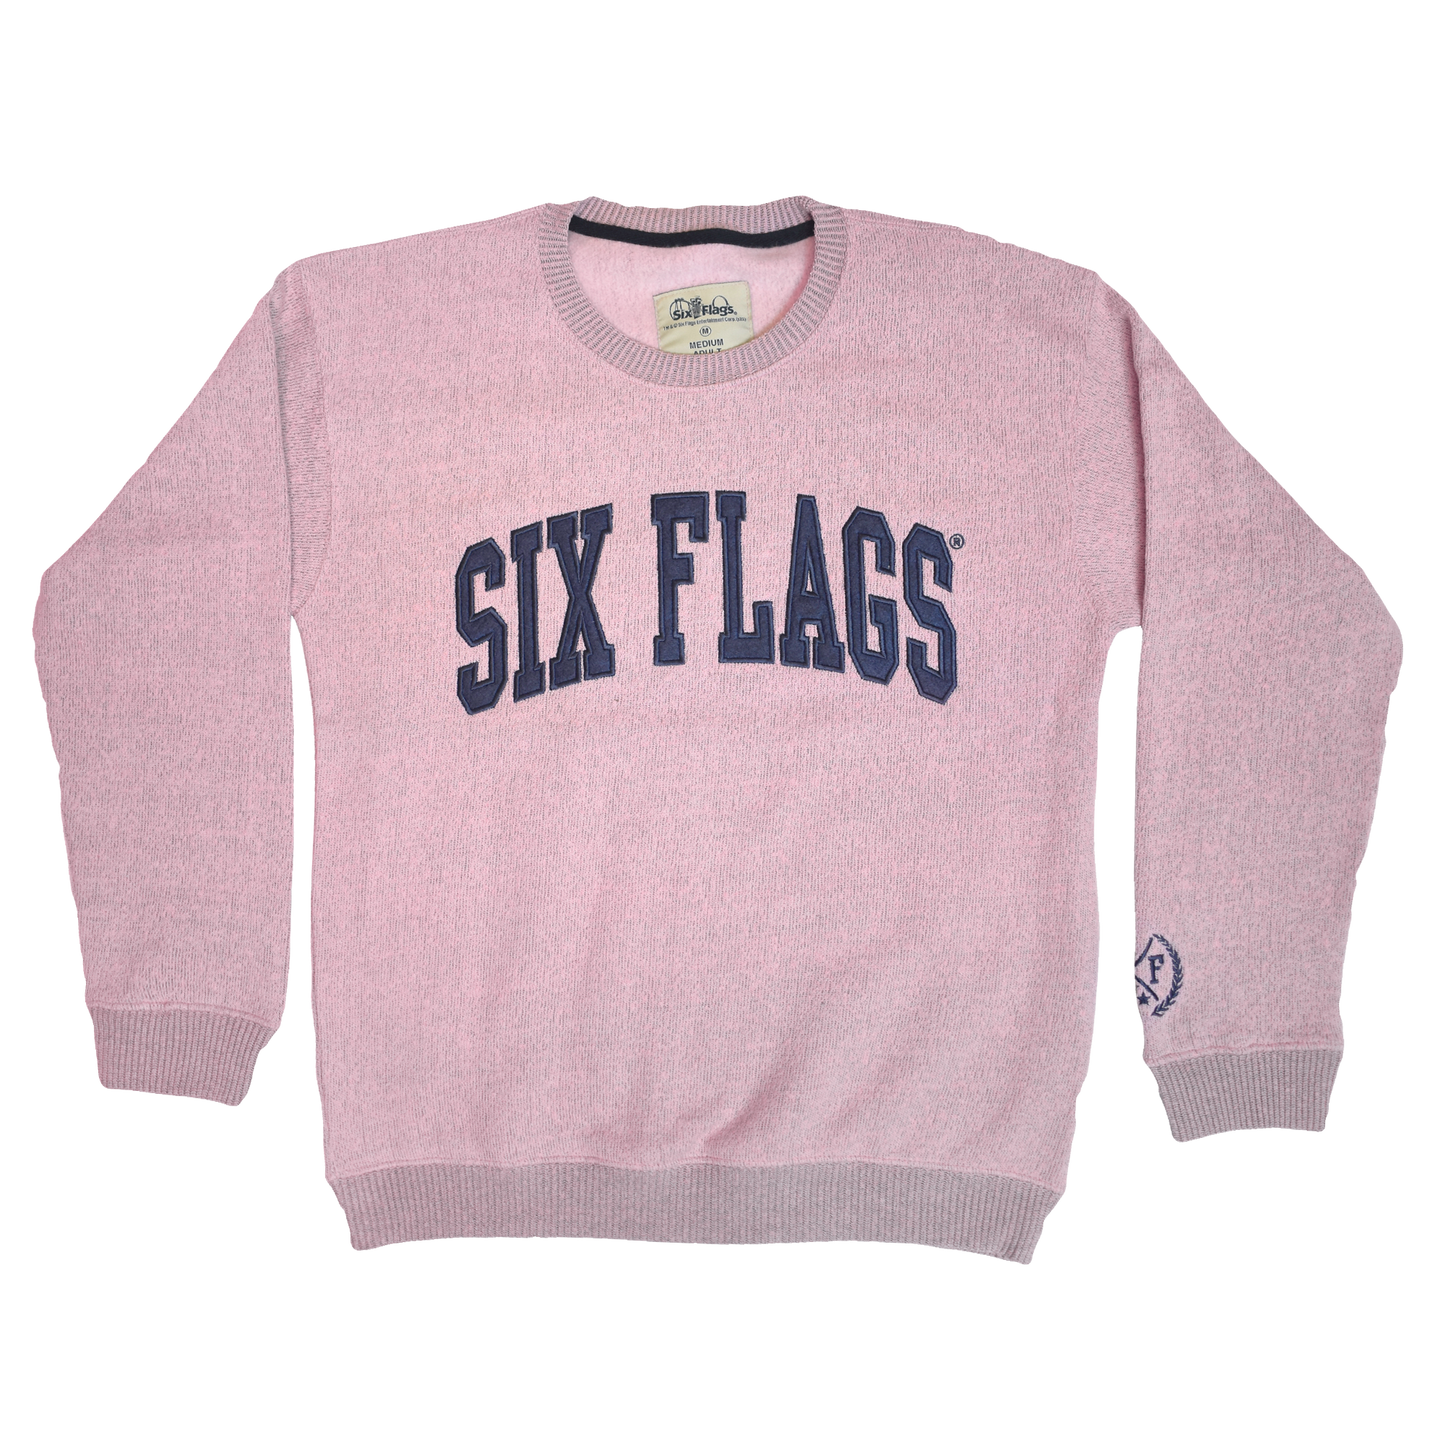 Six Flags Nantucket Crew Fleece - Pink